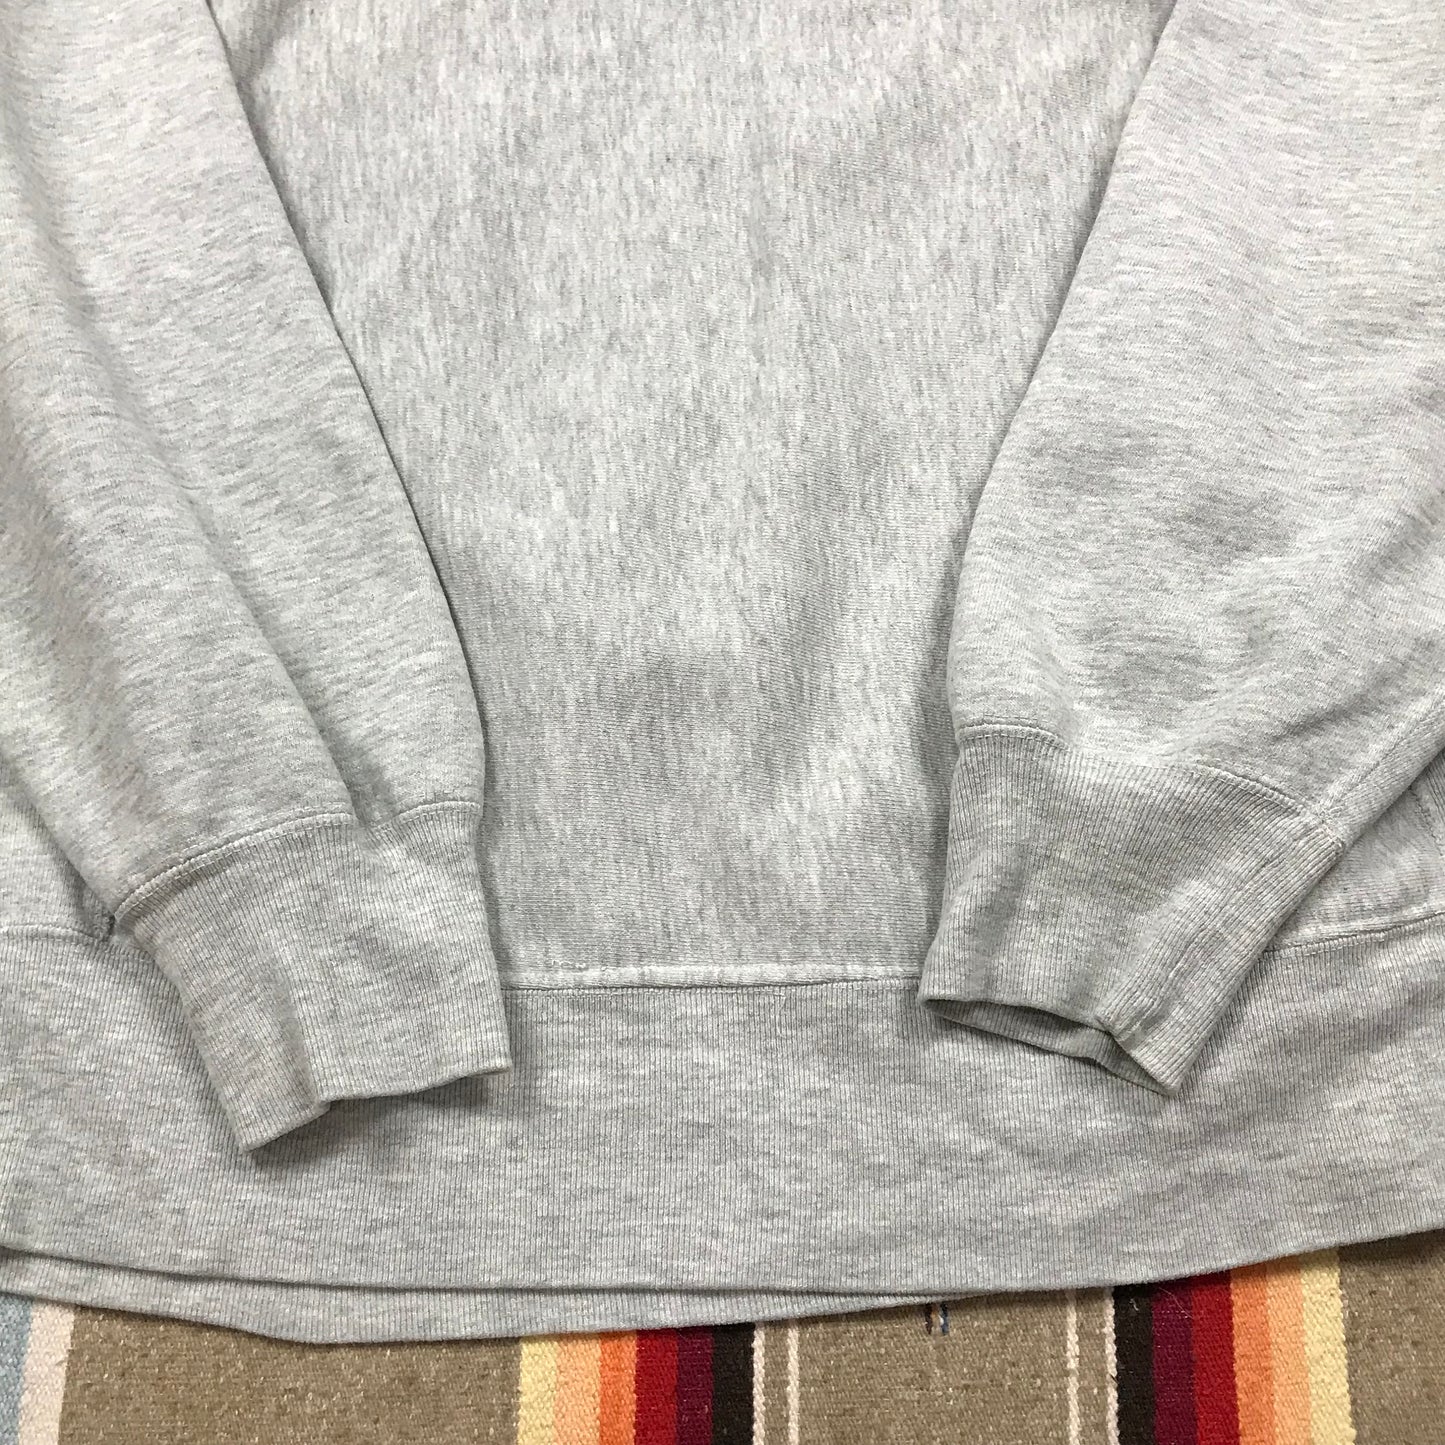 1980s Champion Reverse Weave Sweatshirt Seward Made in USA Size L/XL